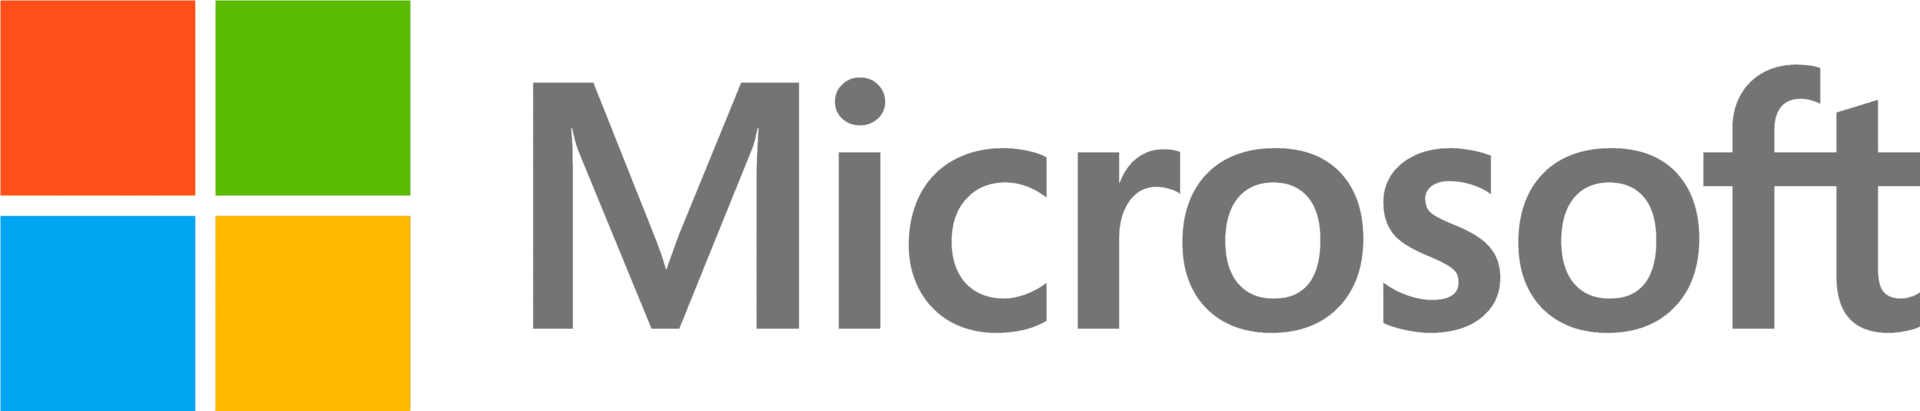 Microsoft DG7GMGF0F4MC.0003 Software-Lizenz/-Upgrade 1 Lizenz(en) (DG7GMGF0F4MC.0003)